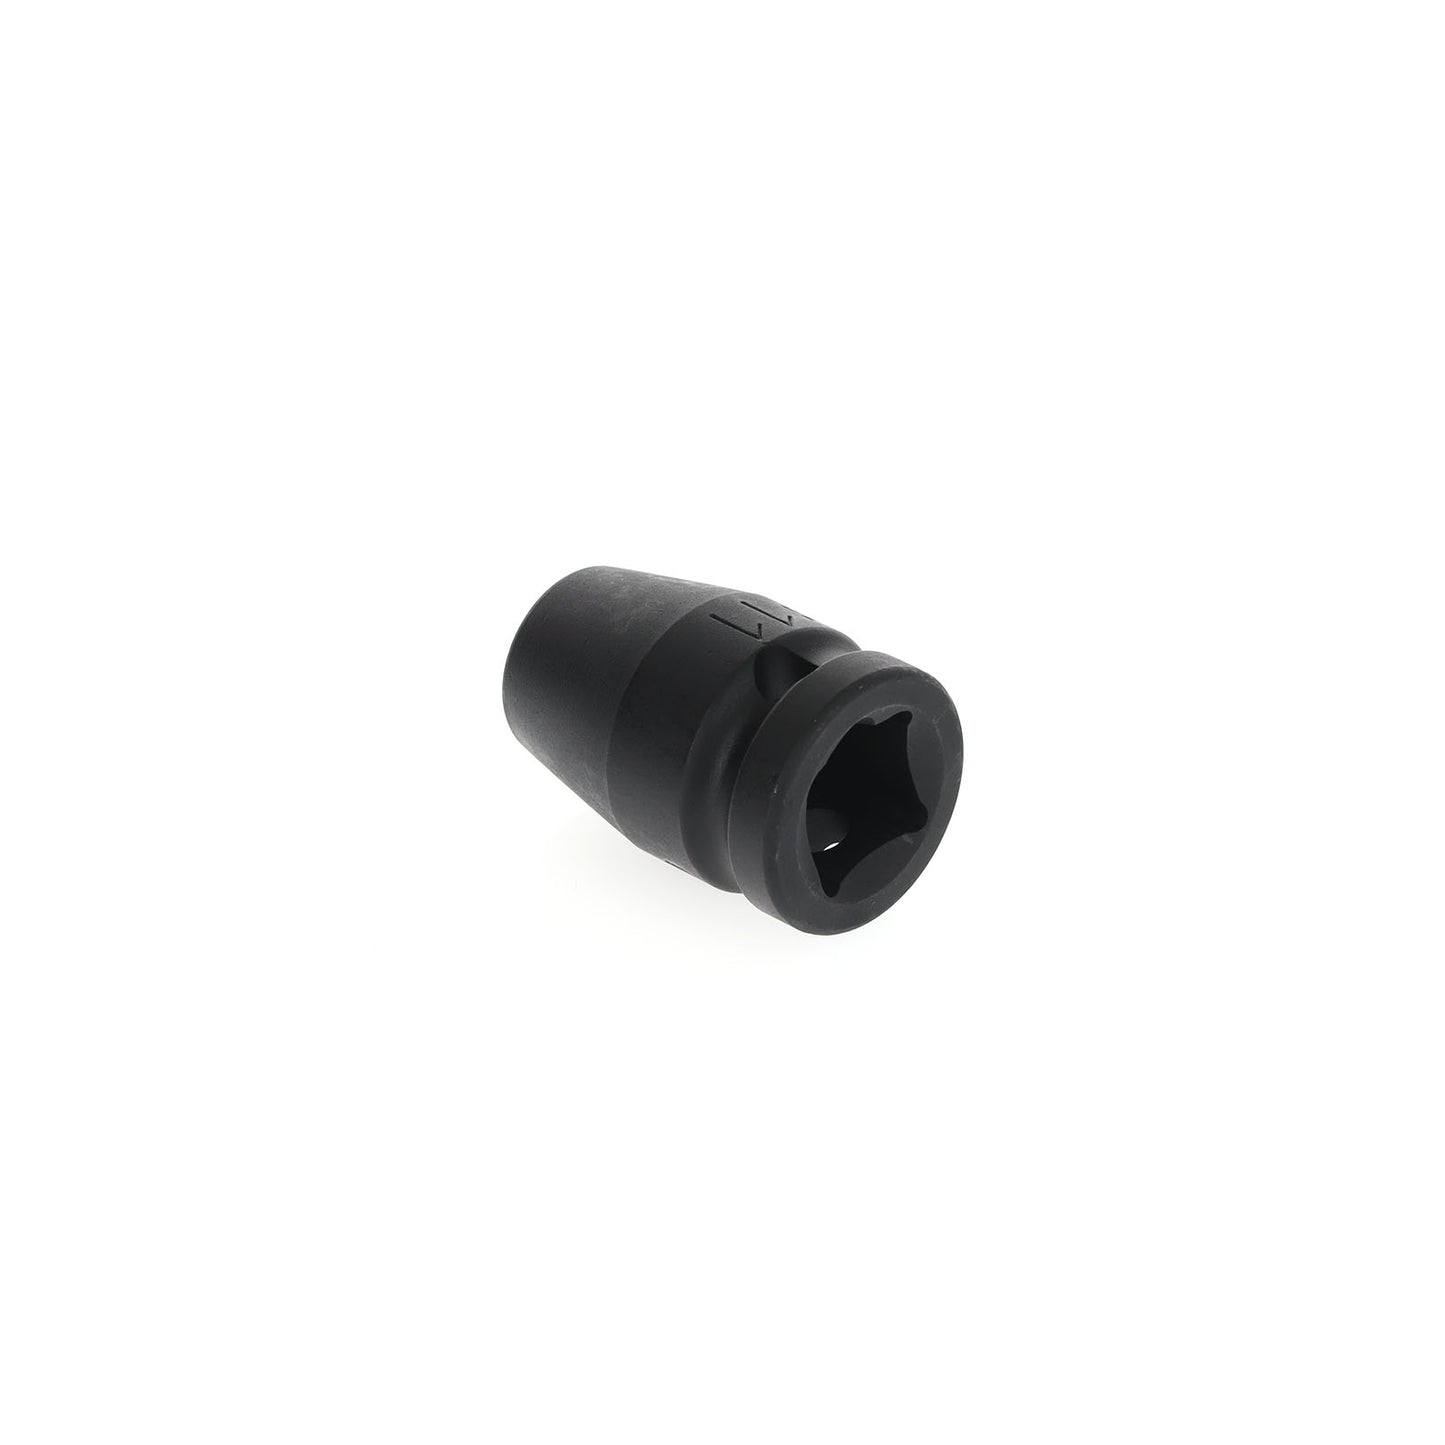 GEDORE K 19 11 - Hexagonal Impact Socket 1/2", 11 mm (6160360)